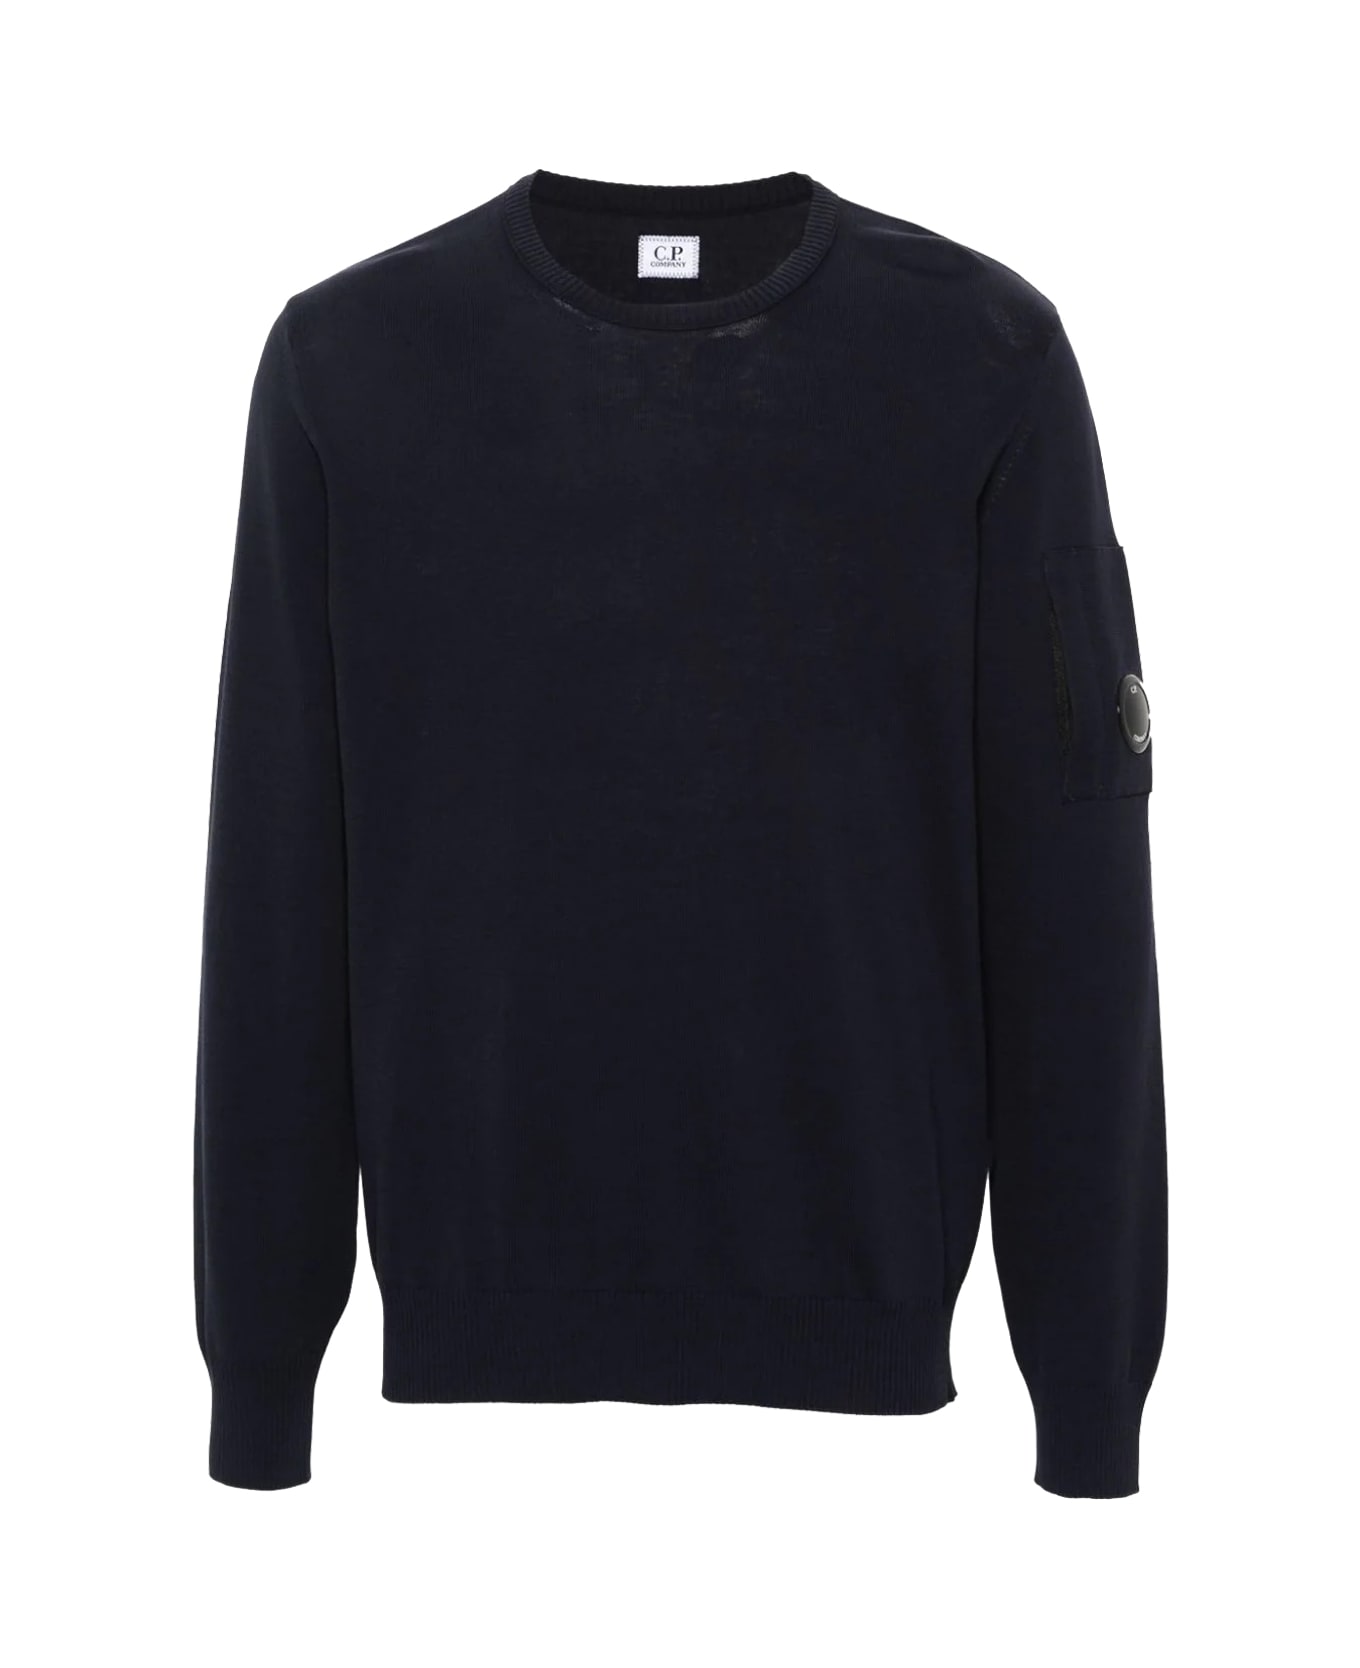 C.P. Company Sweater - Blu